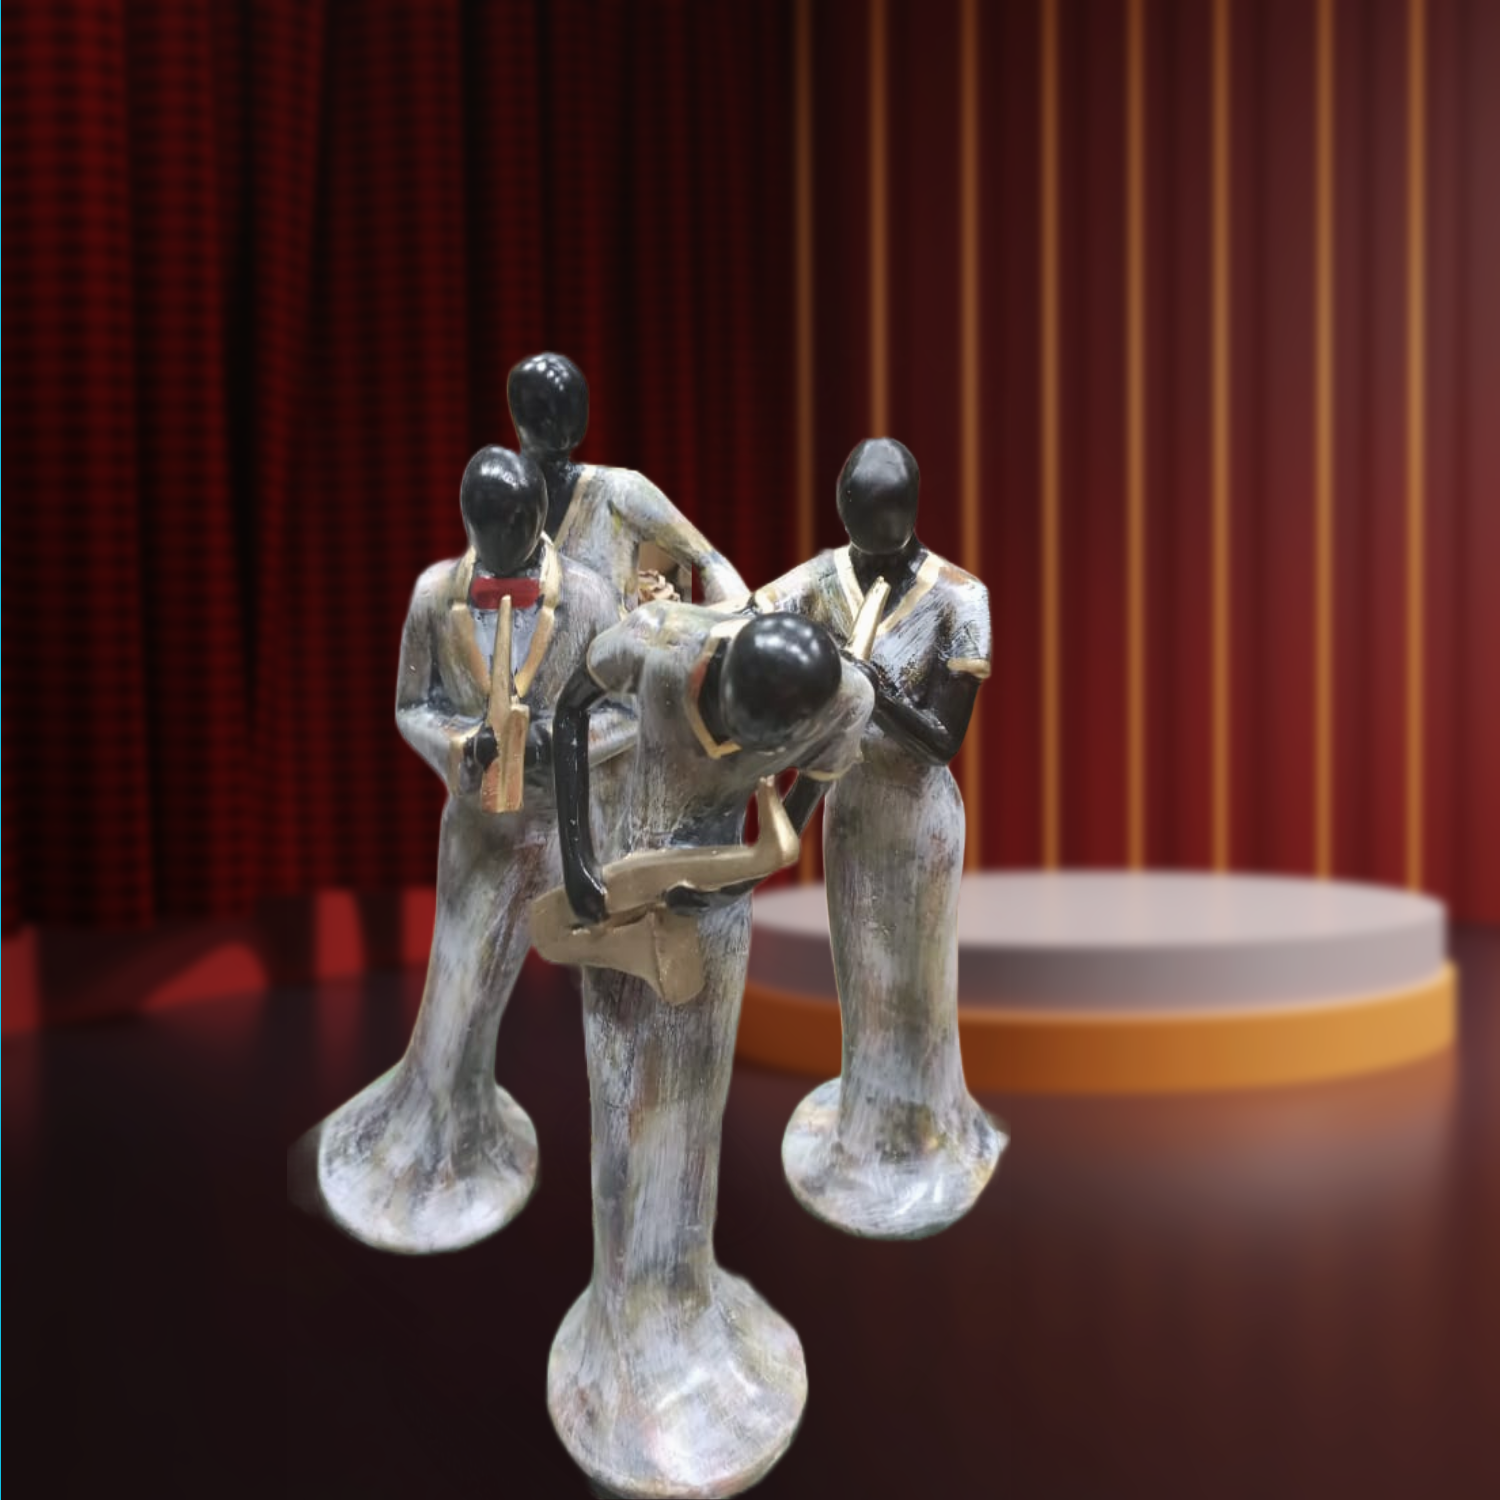 Statue ALiLA Musician Band Resin Human Statues, Ideal for Home Interior Decorative Showpiece Figurine, Set of 4 Statue